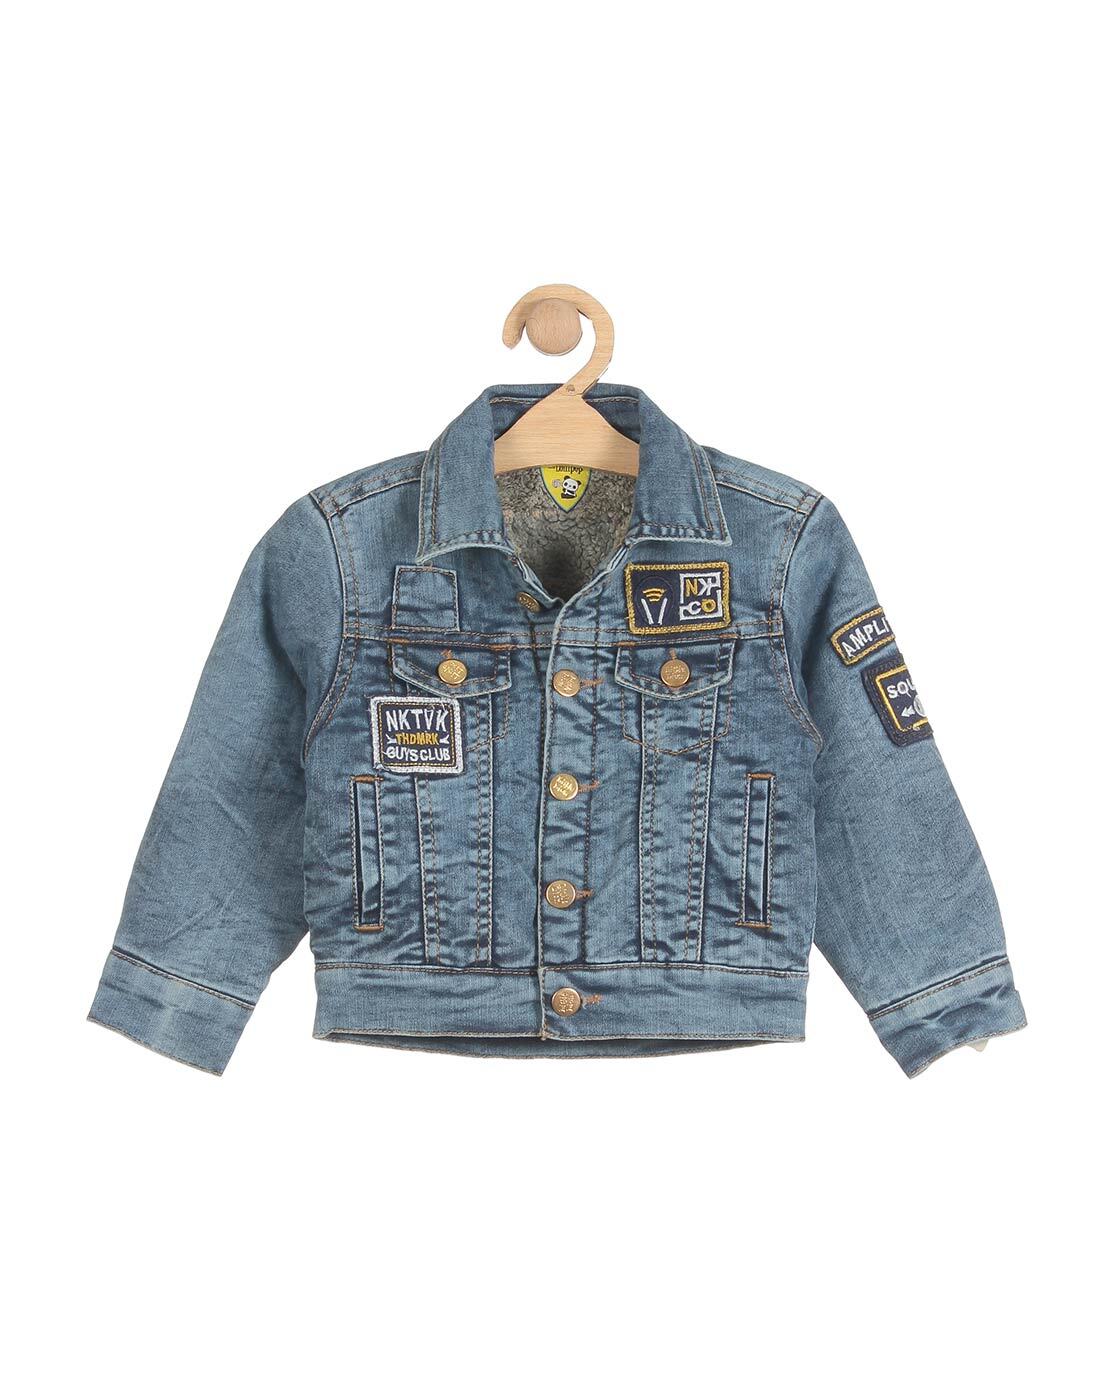 Oshkosh B'gosh Toddler Boys' Denim Jacket - Light Blue 18m : Target